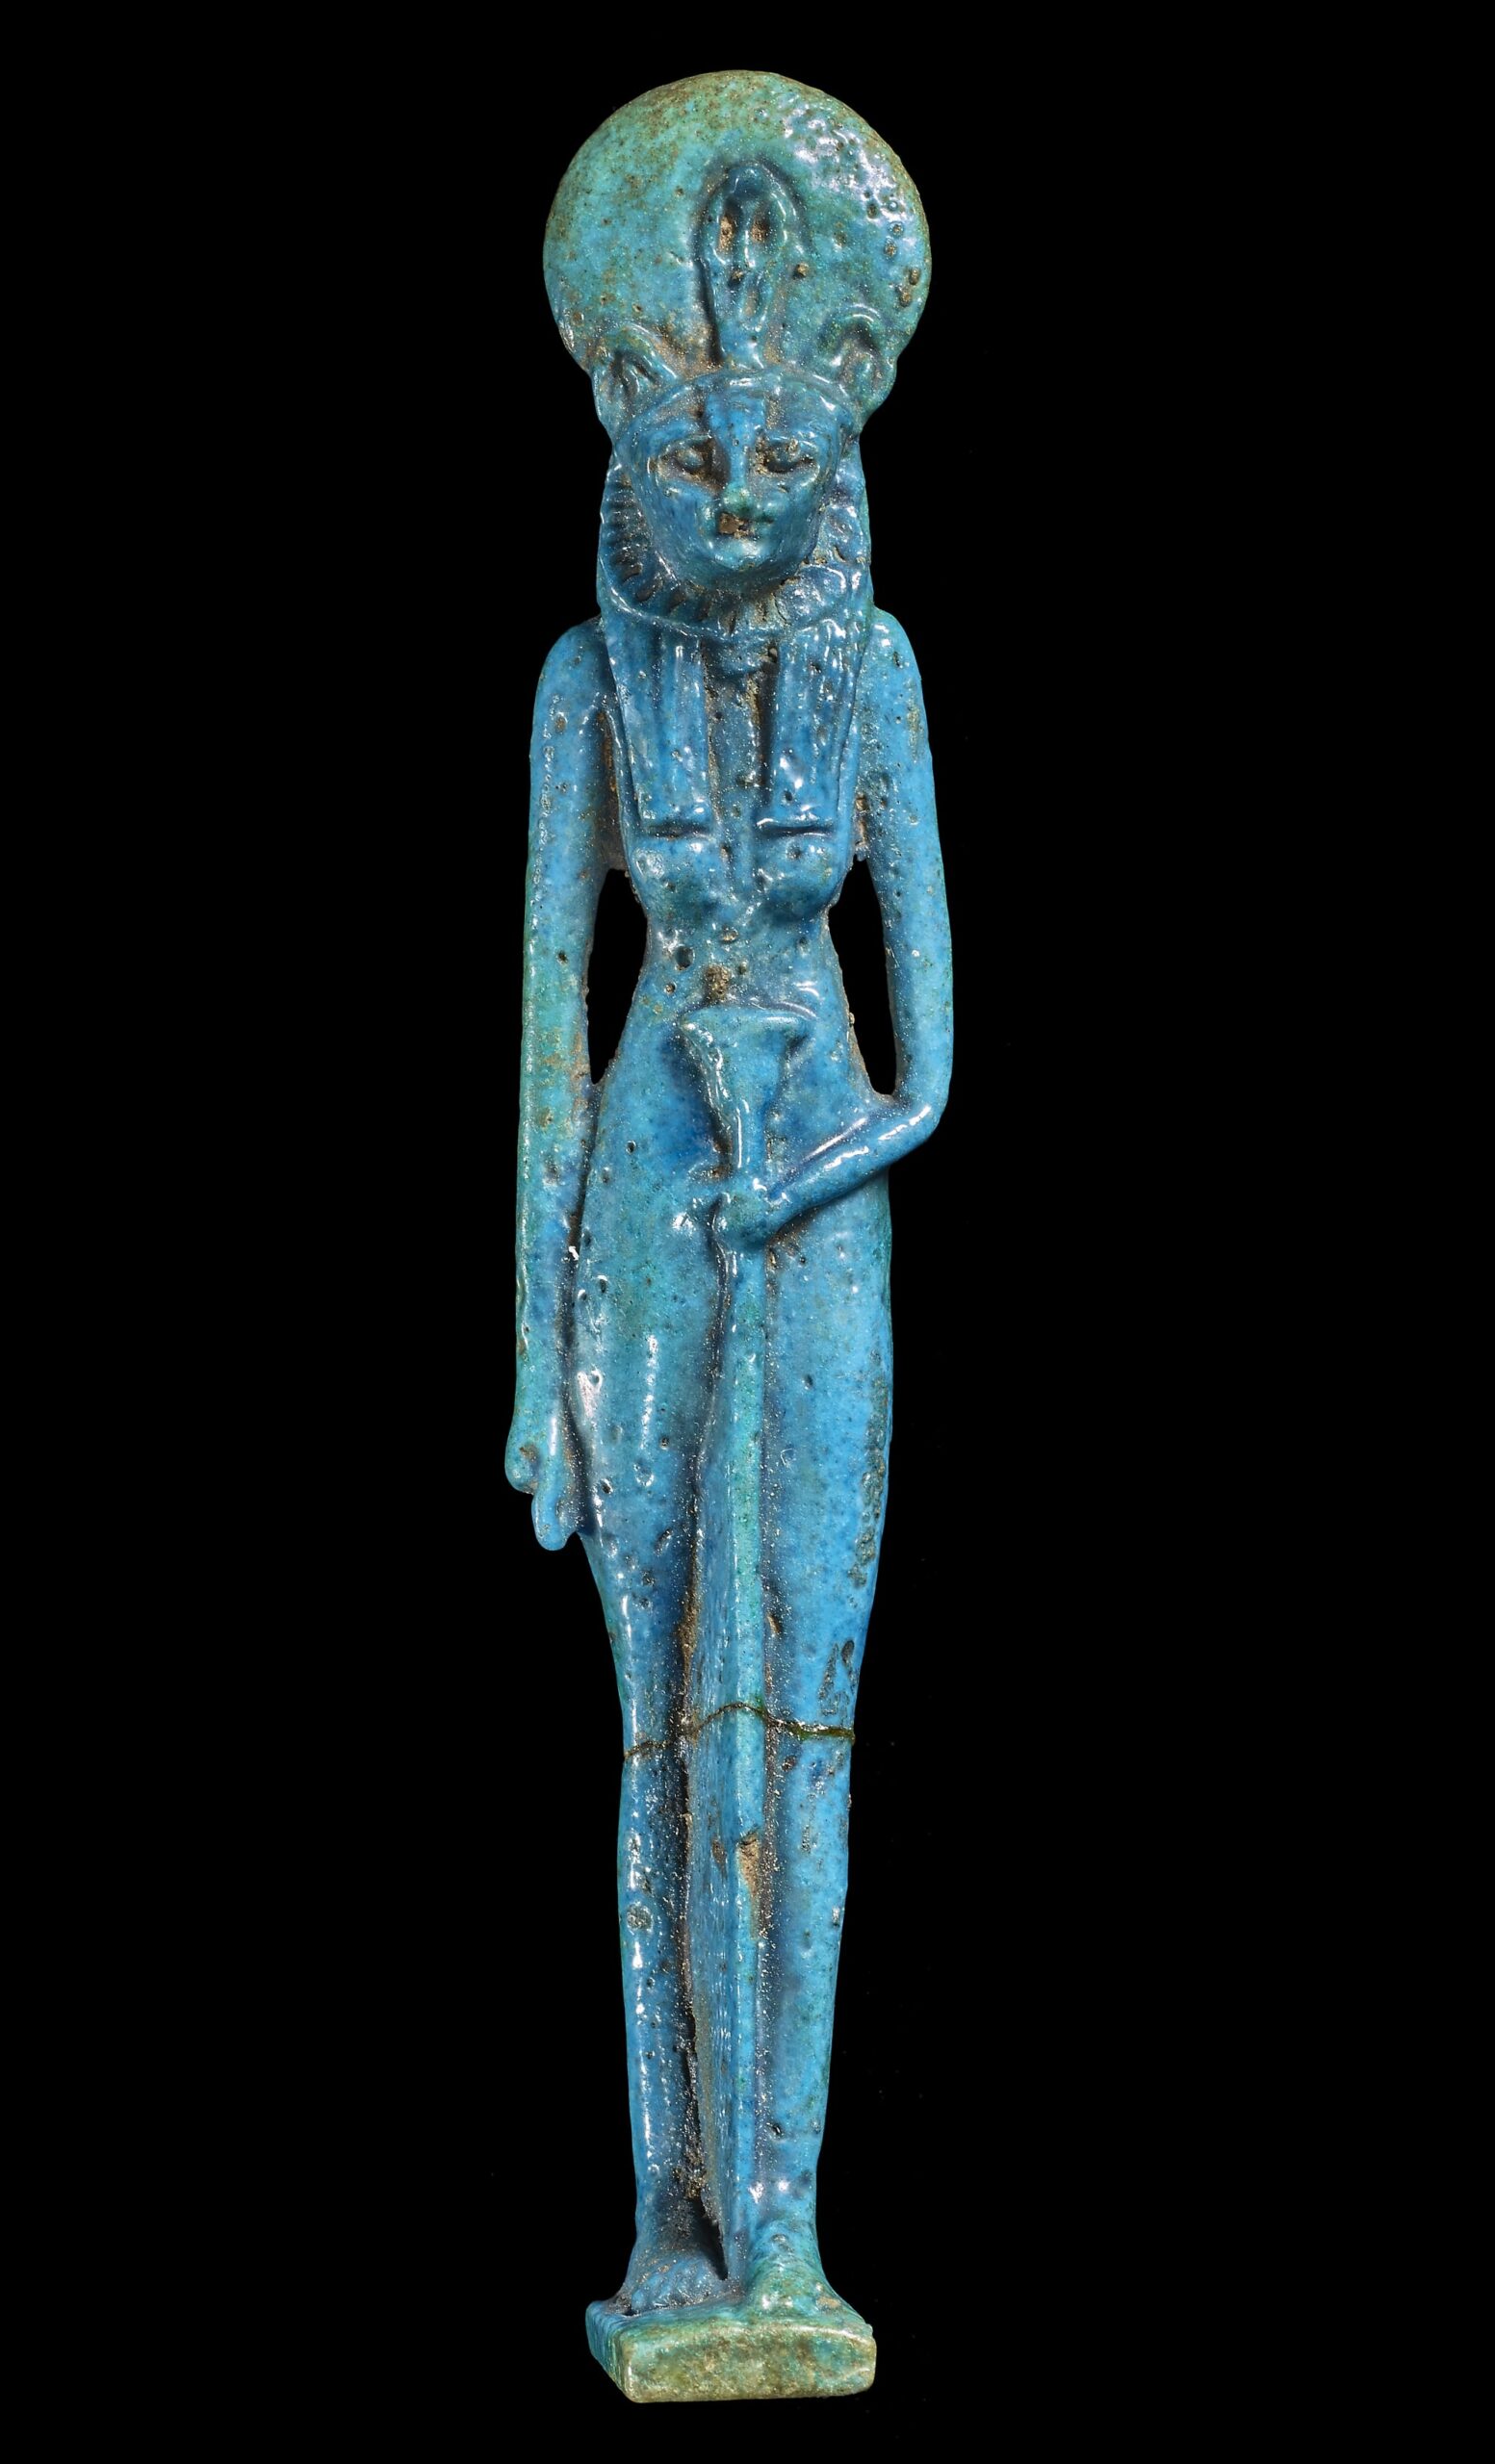 a blue statue of a feminine figure with a cat head